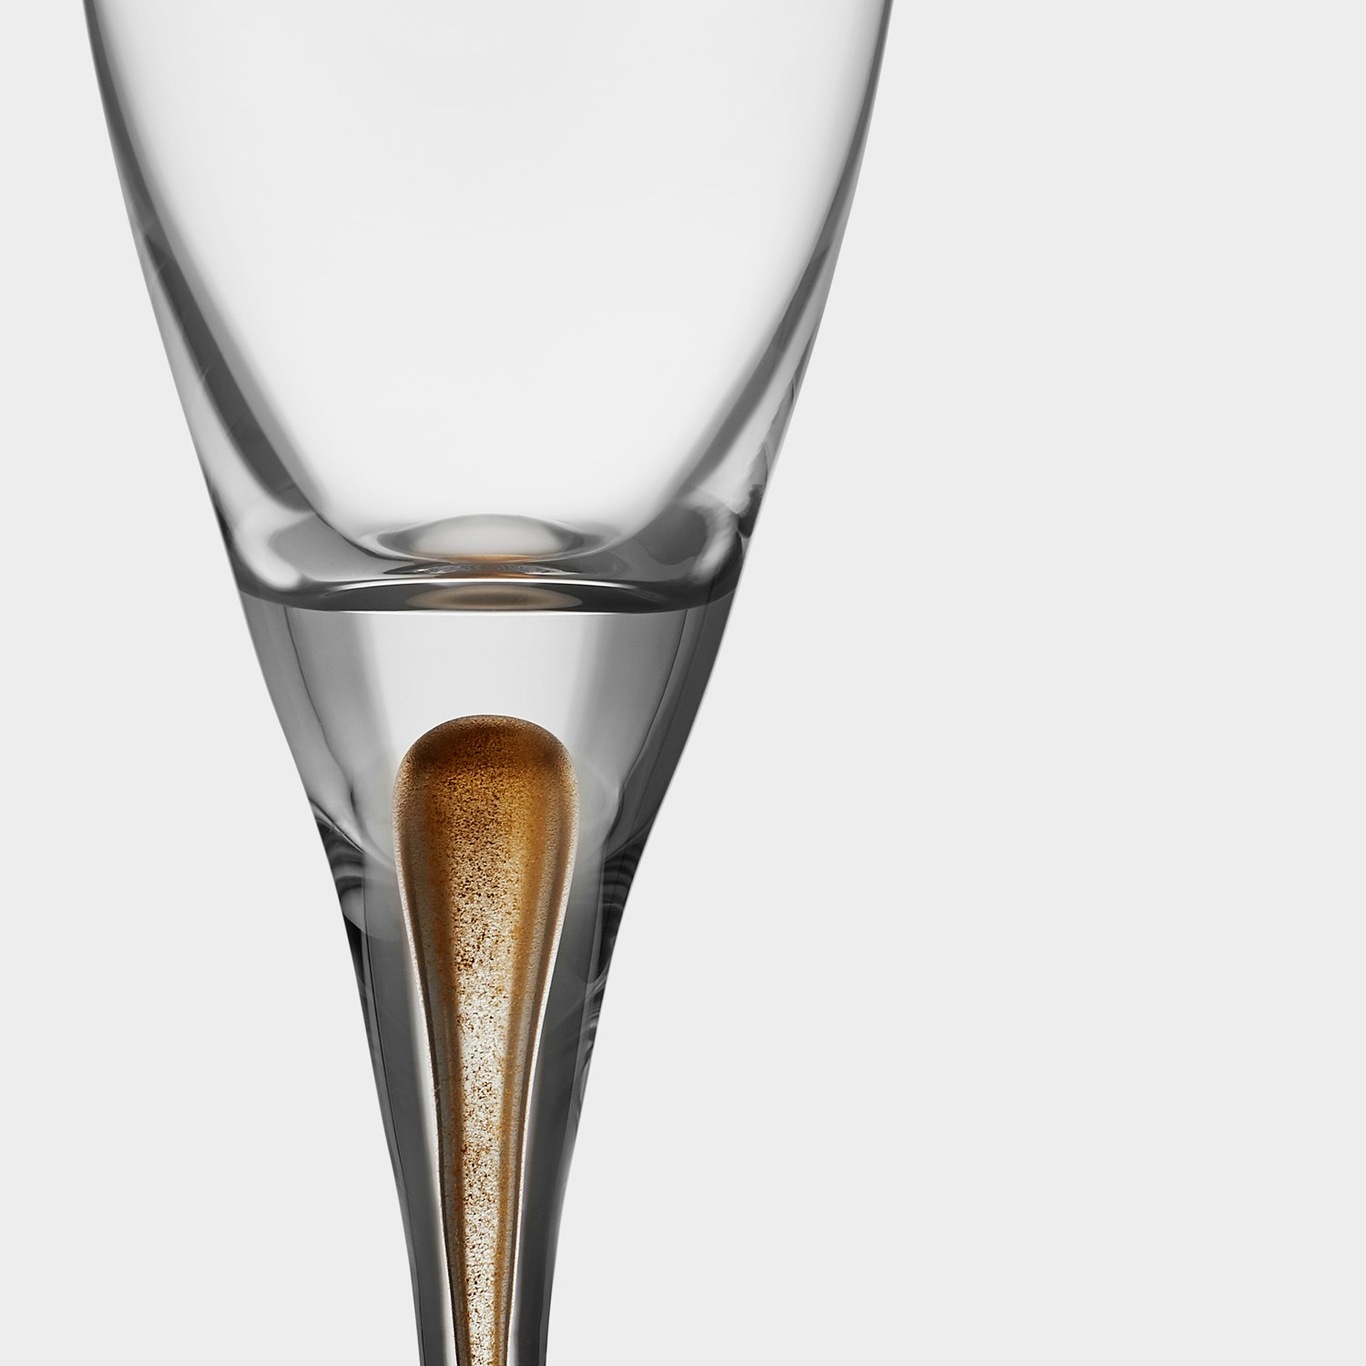 https://royaldesign.com/image/2/orrefors-intermezzo-champagne-glass-2-pack-26-cl-gold-6?w=800&quality=80